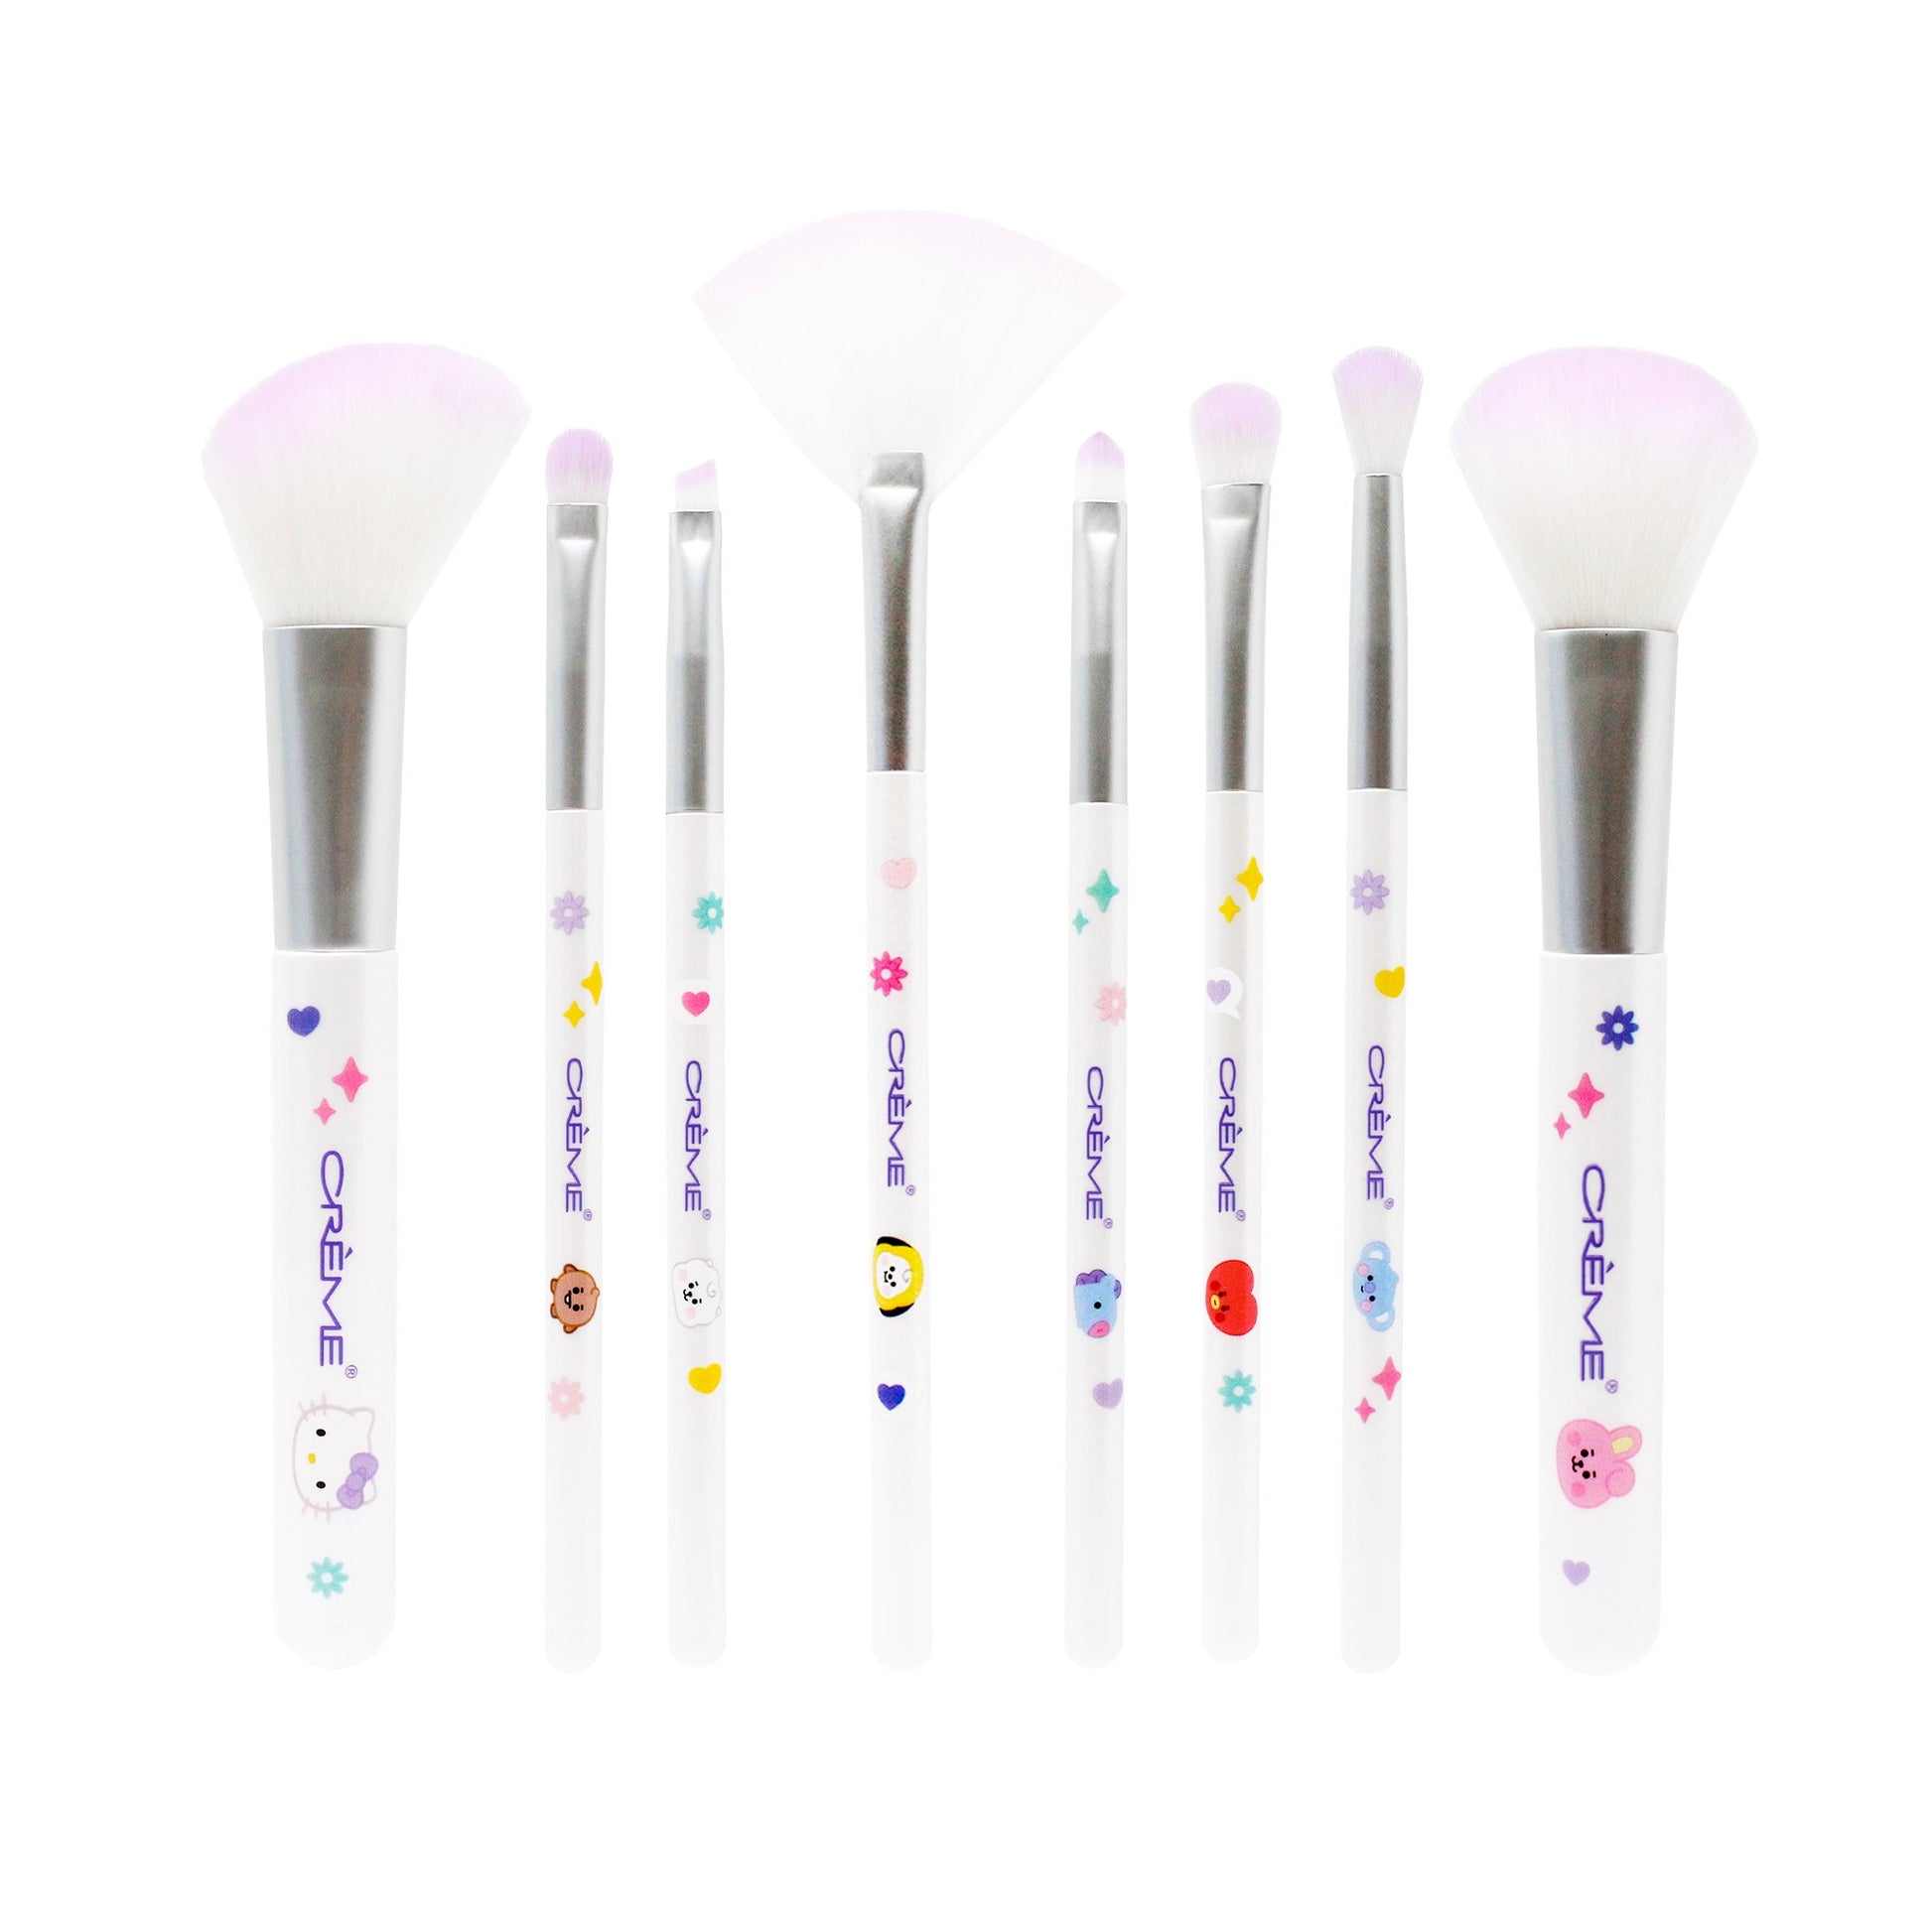 Hello Kitty & BT21 Dreamy Essentials Makeup Brush Collection, $28